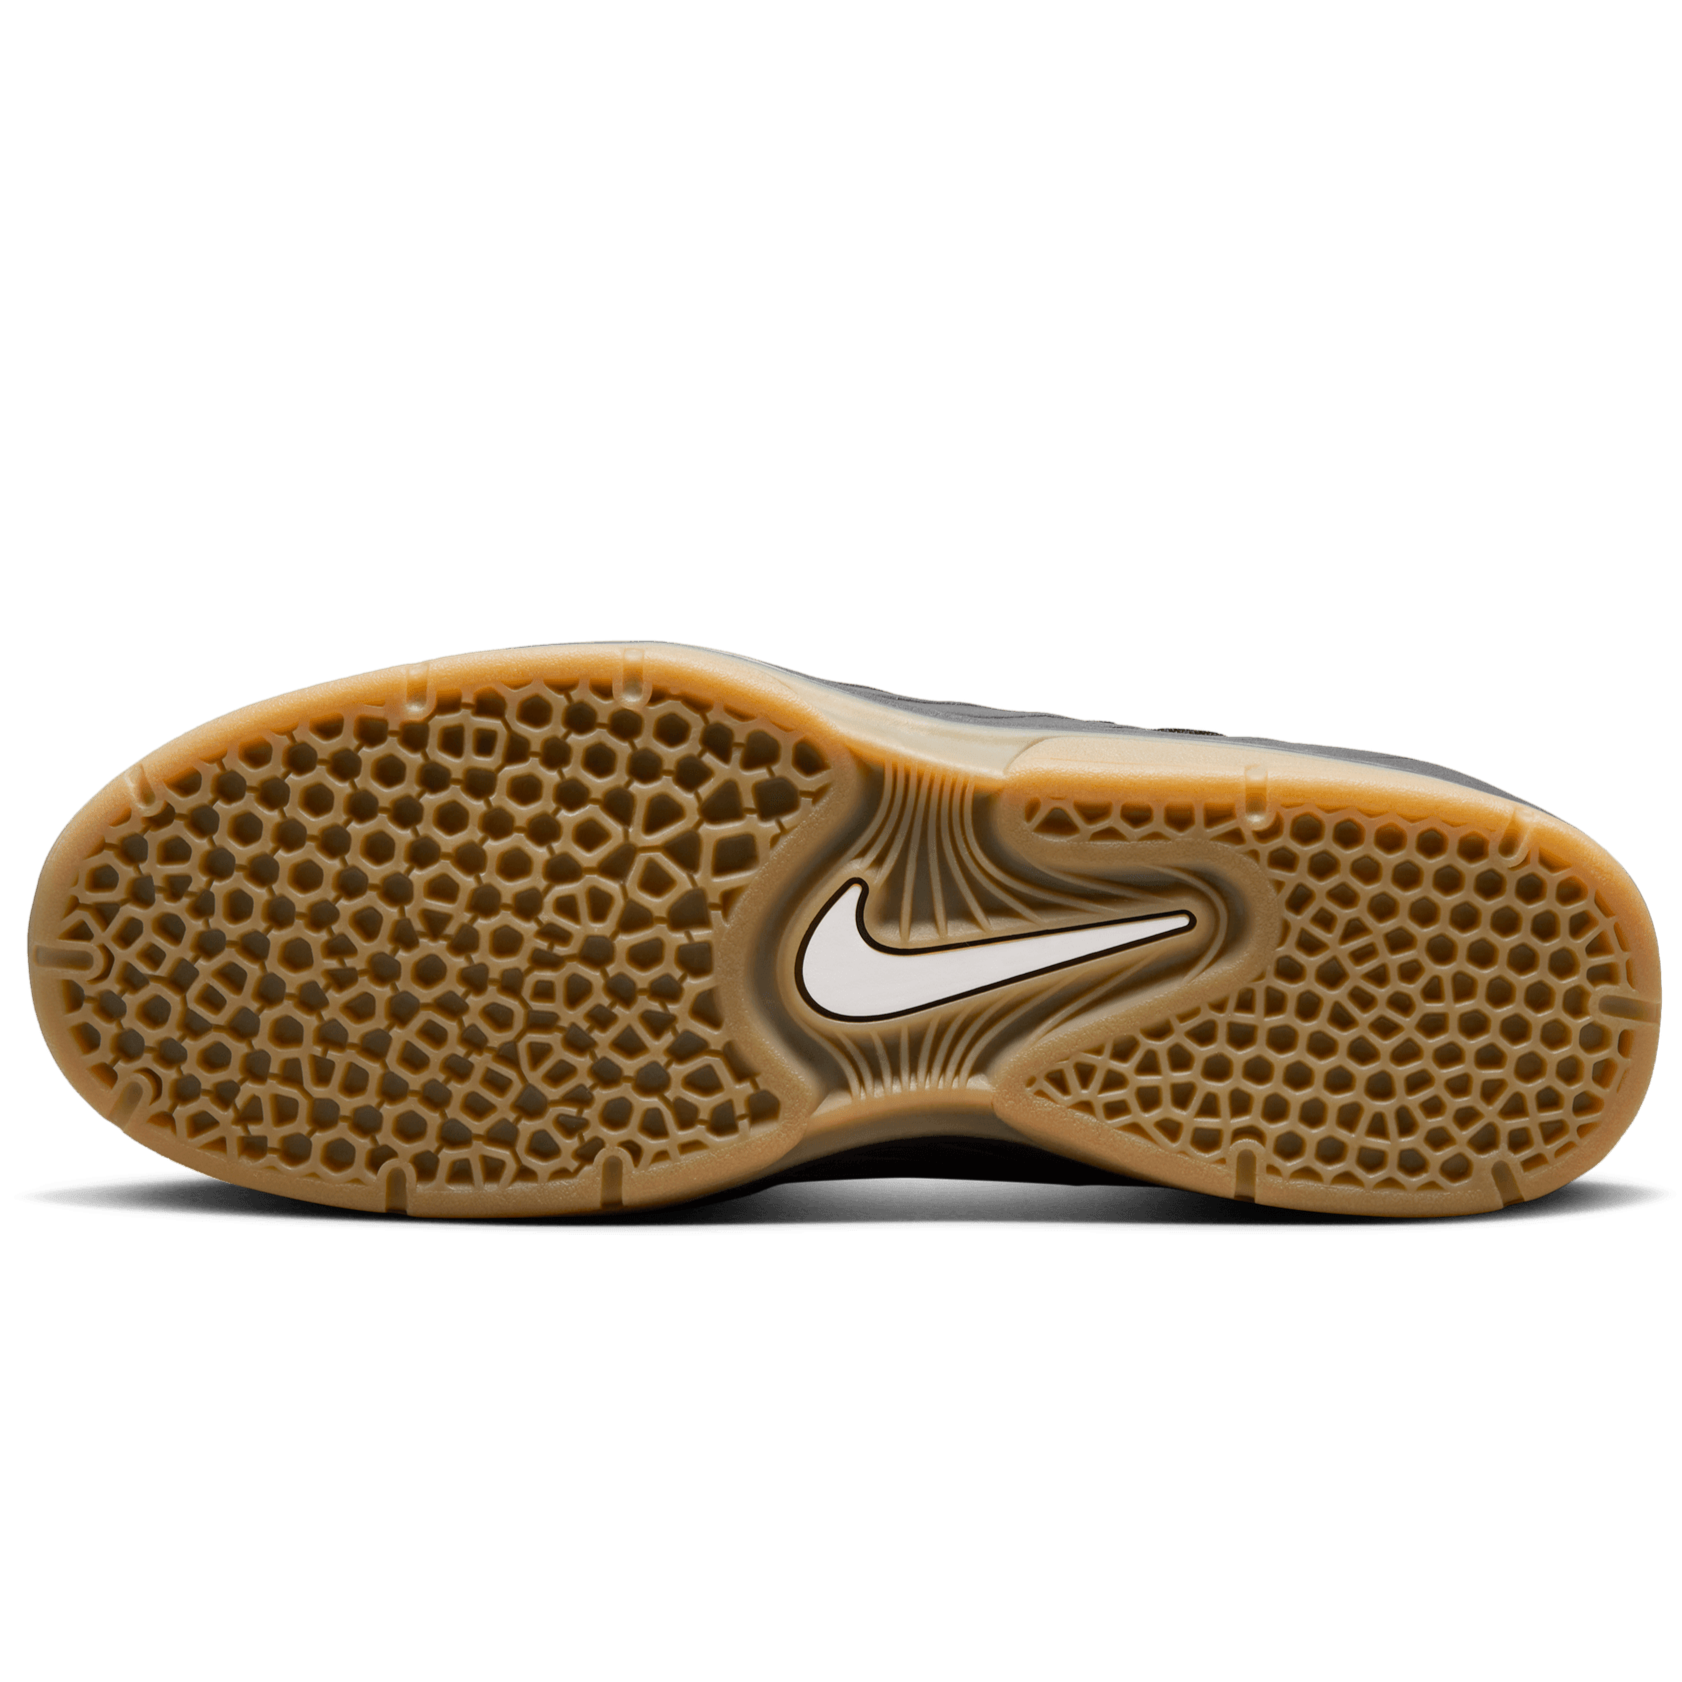 Black/Gum Vertebrae Nike SB Skate Shoe Bottom